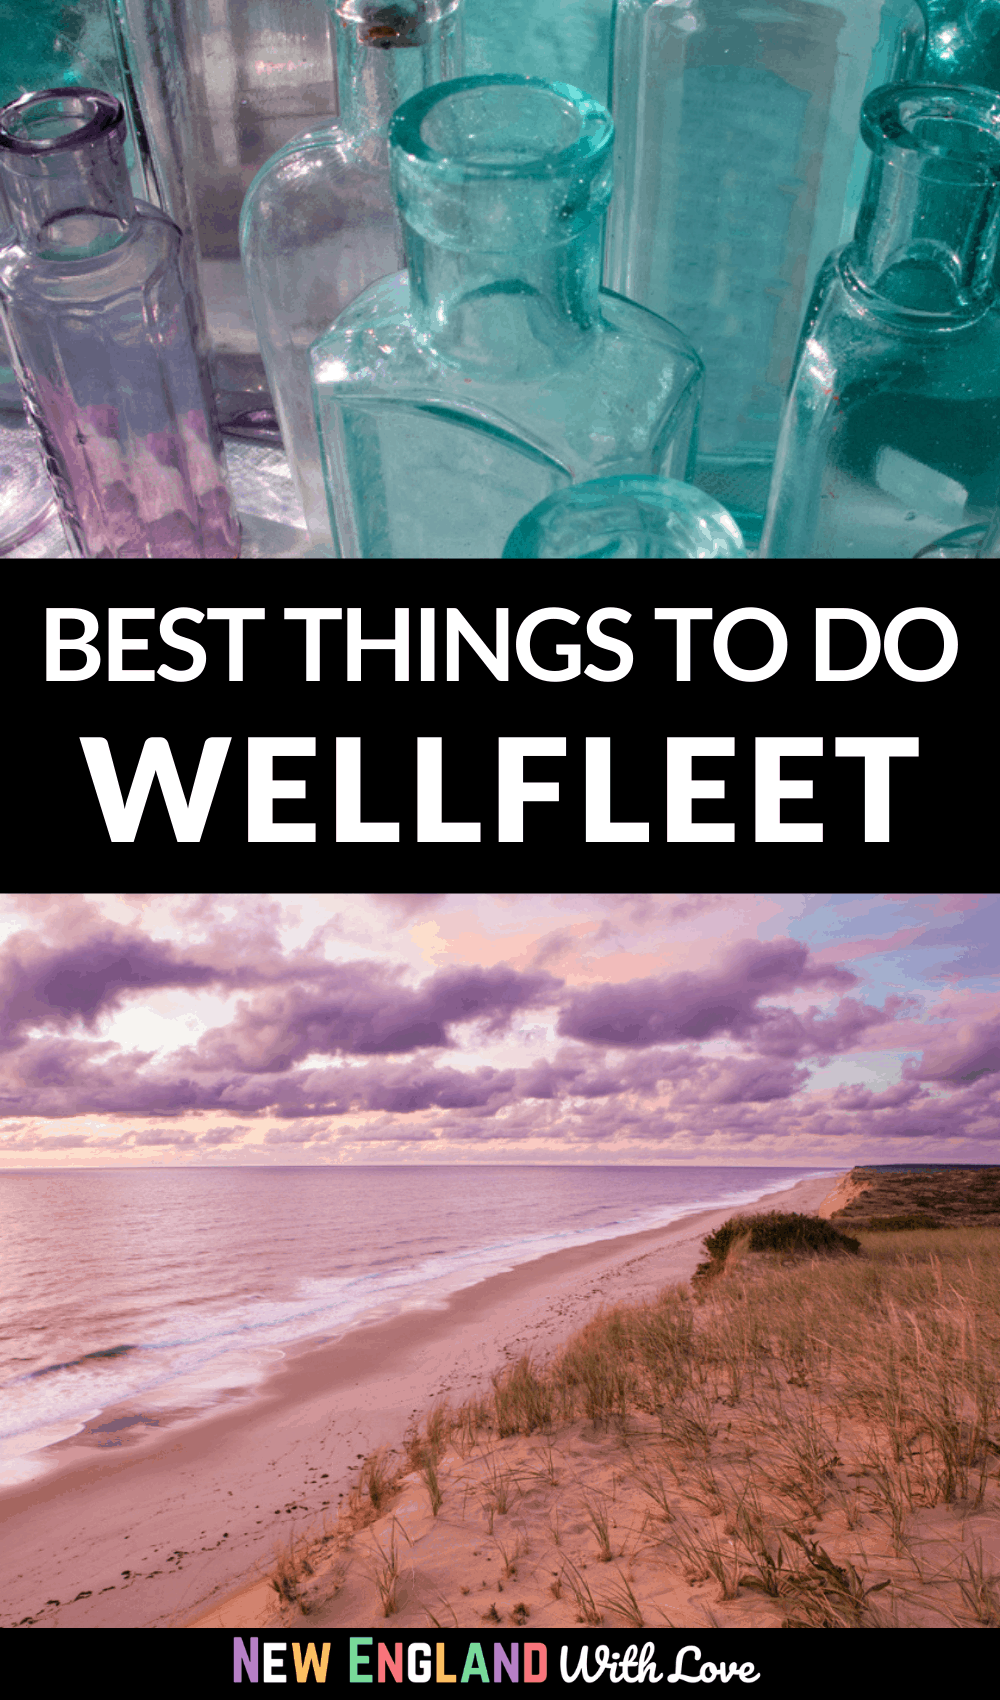 Pinterest graphic reading "BEST THINGS TO DO WELLFLEET"